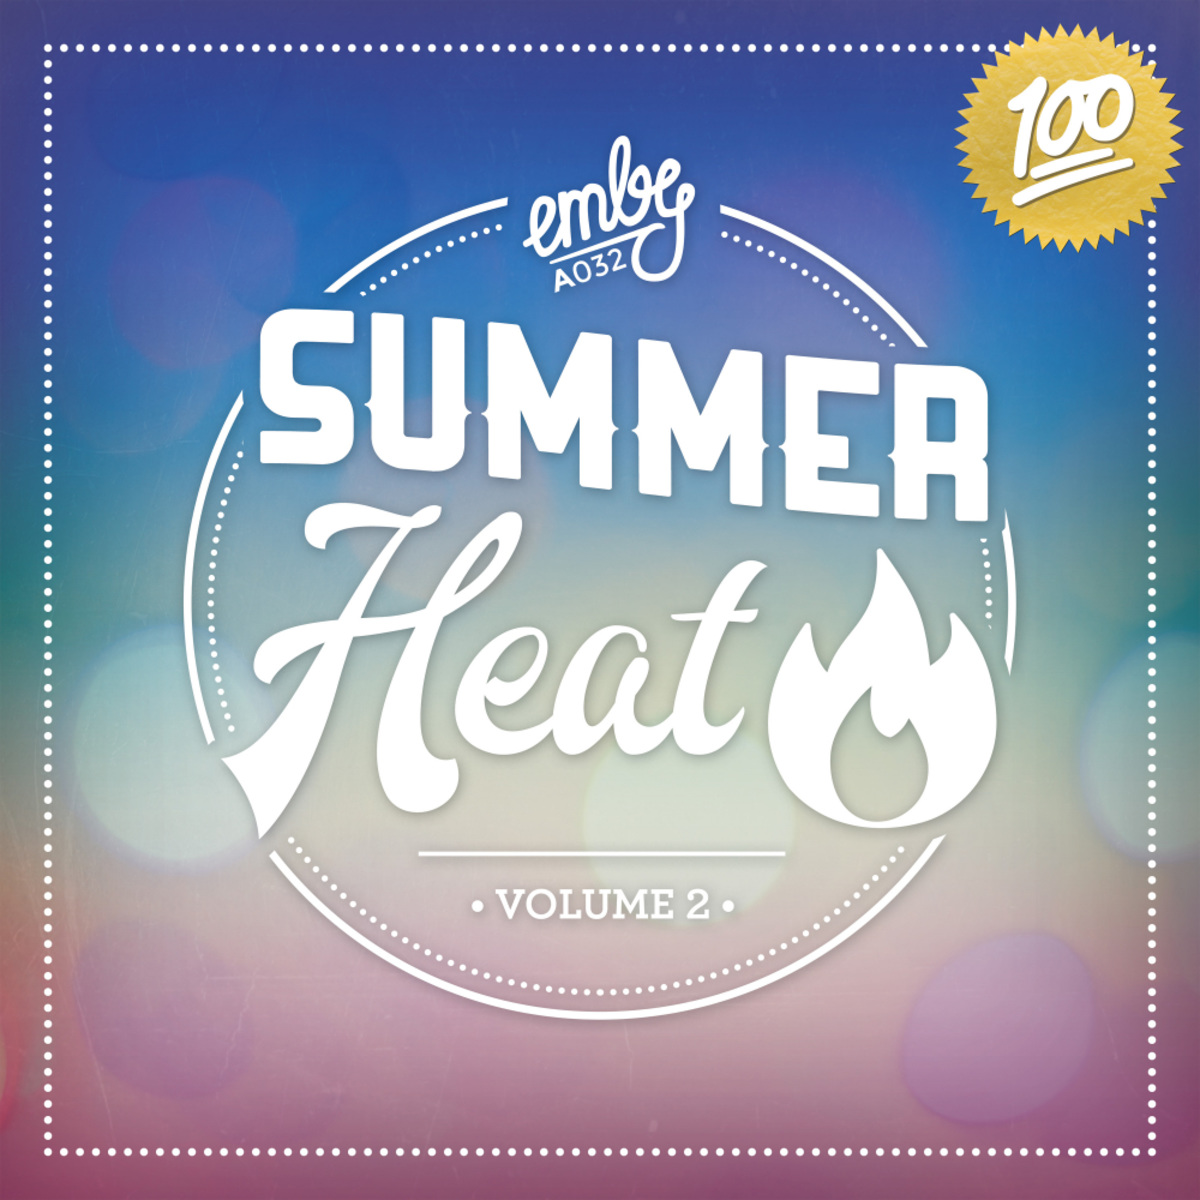 VA - Summer Heat, Vol. 2 / Emby